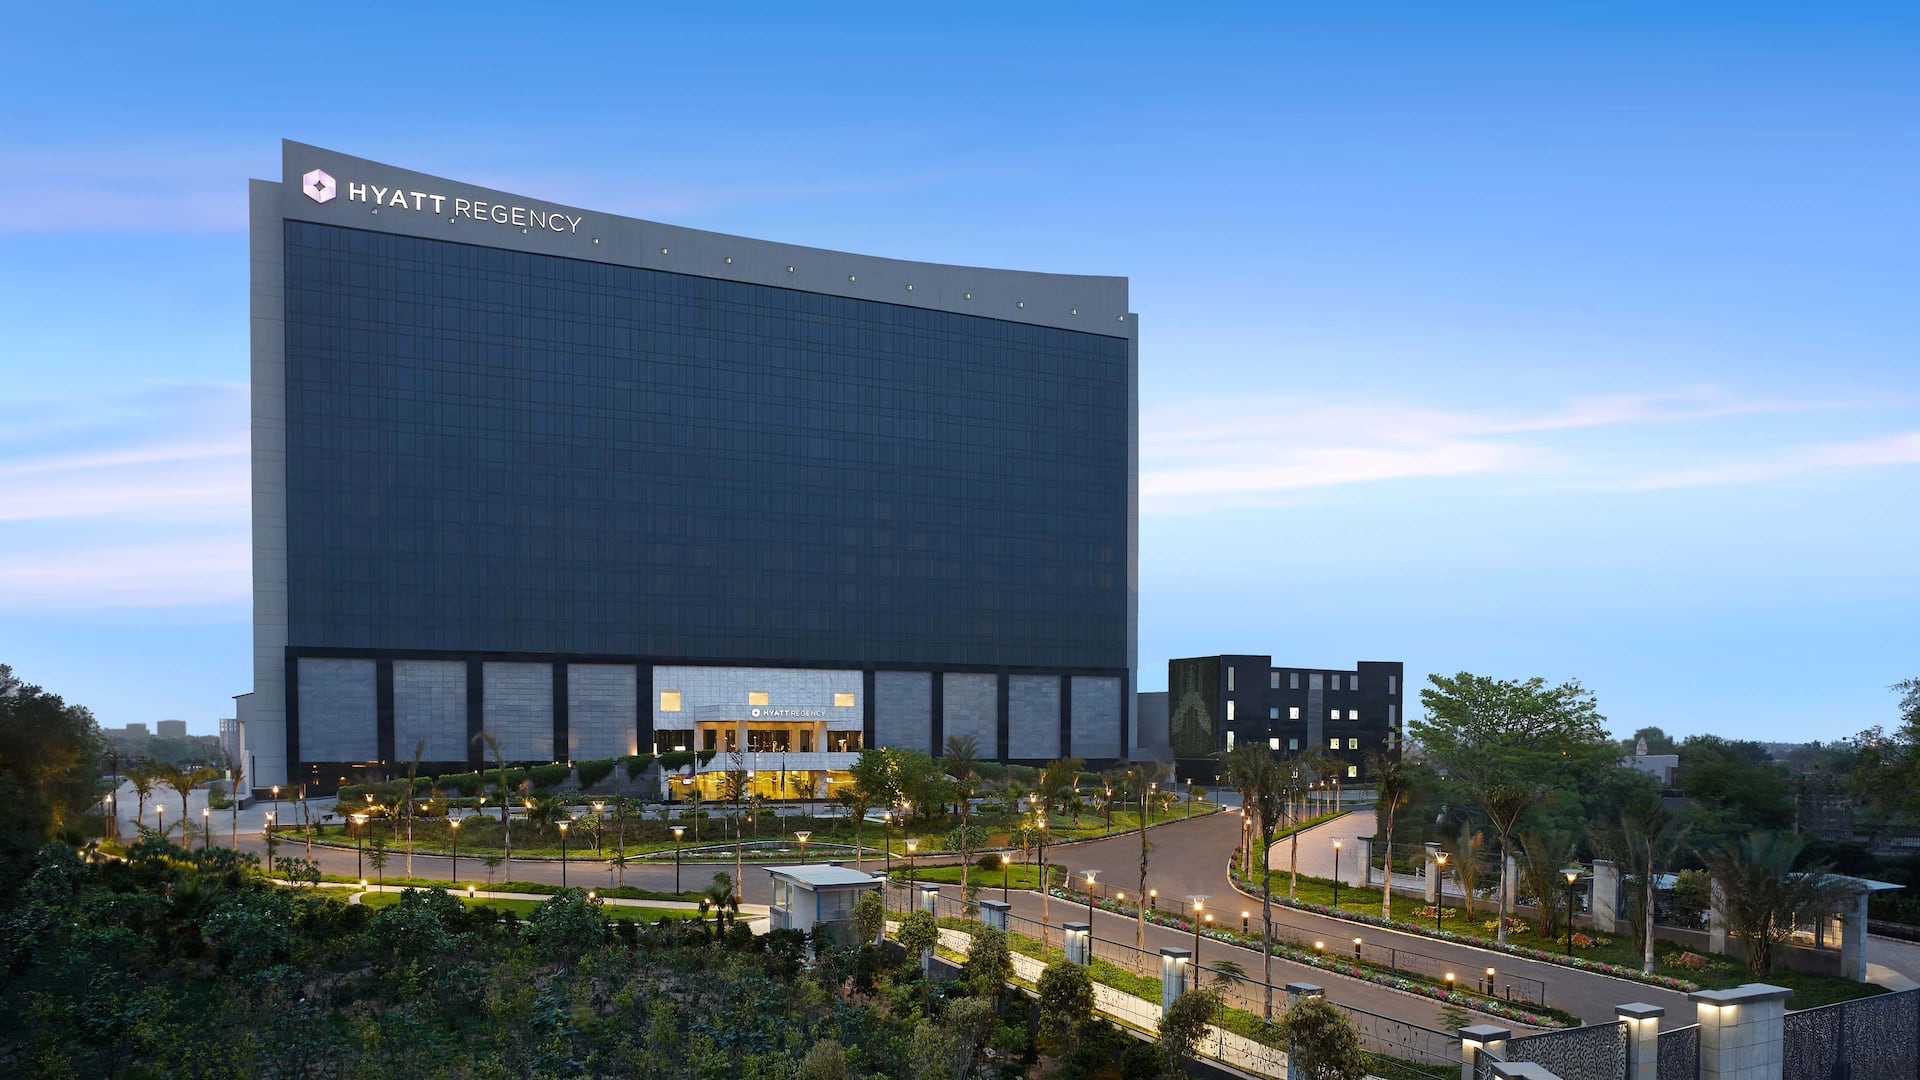 Hotels in Gurgaon Near Cyber City & NH8 Hyatt Regency Gurgaon